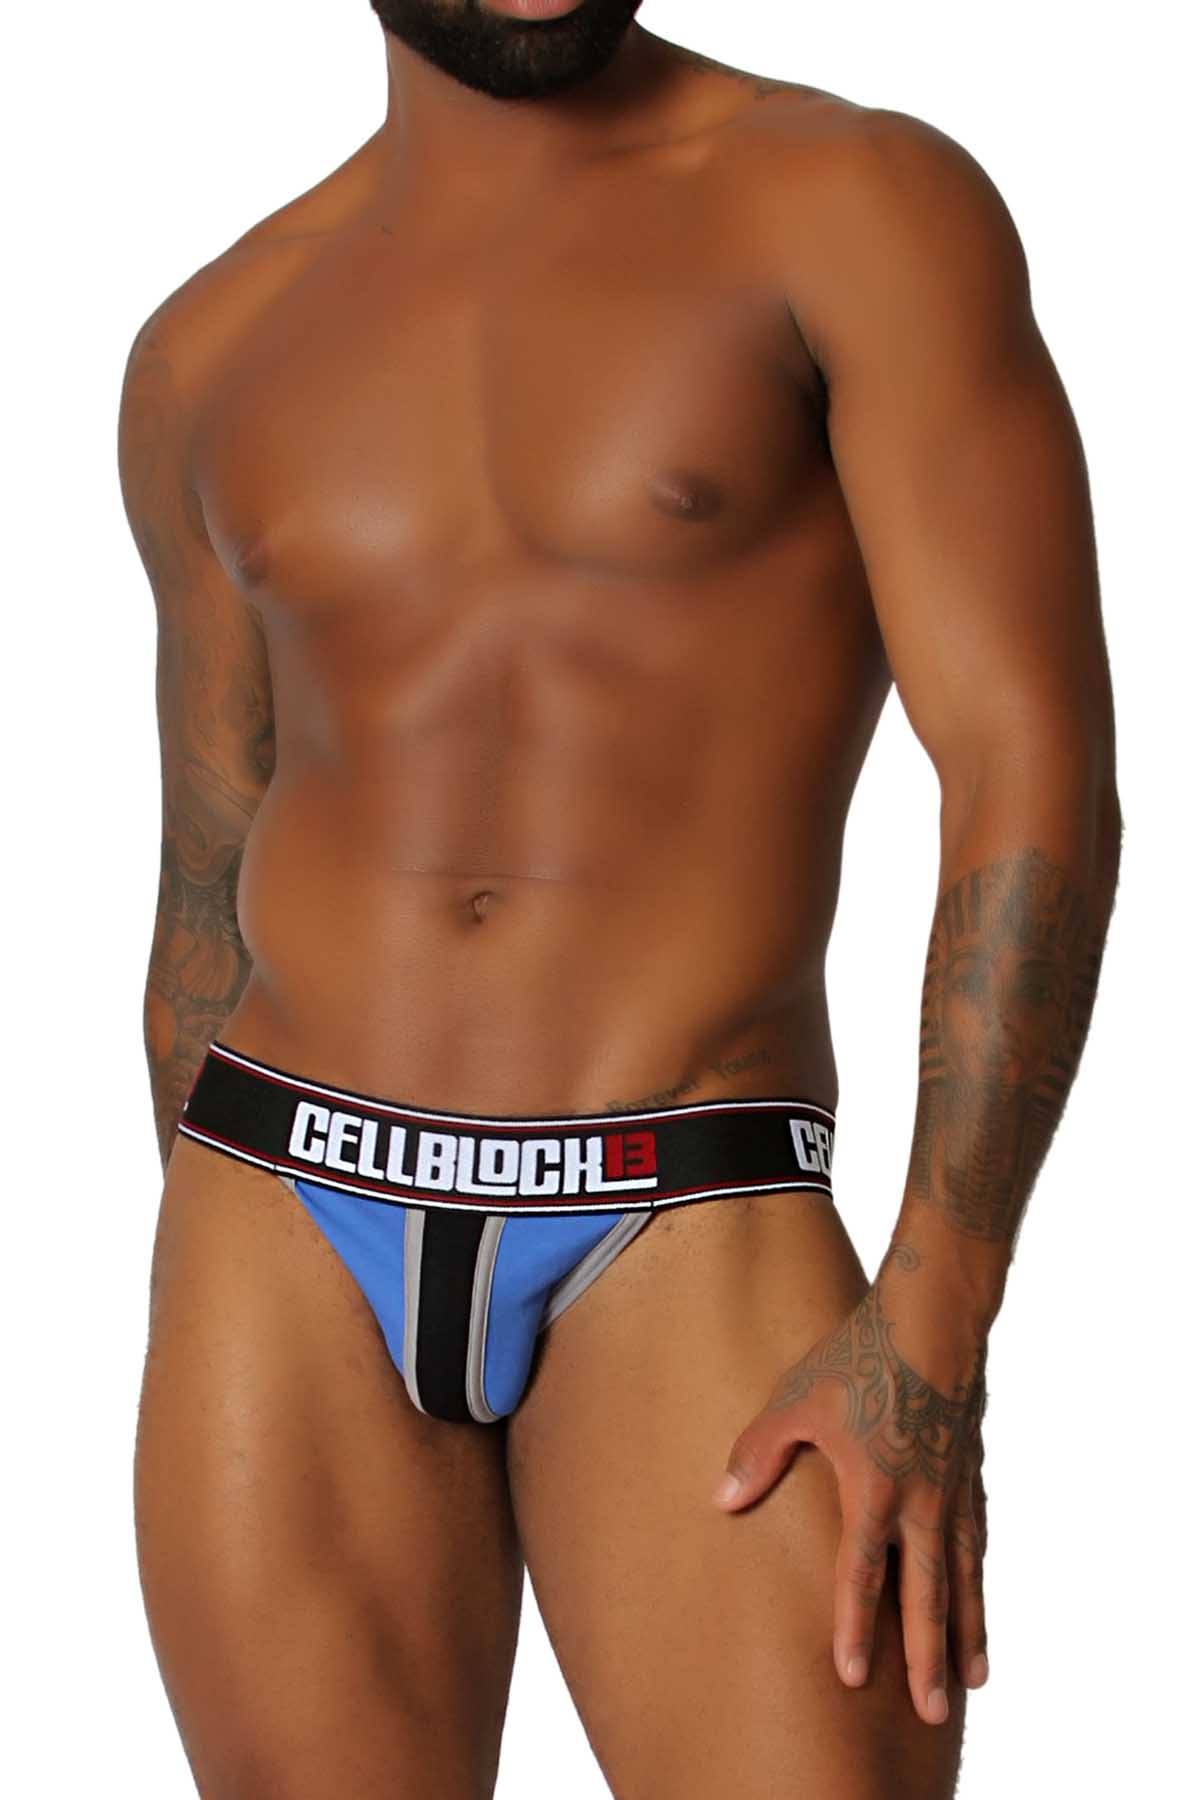 CellBlock 13 Blue Viper II Thong